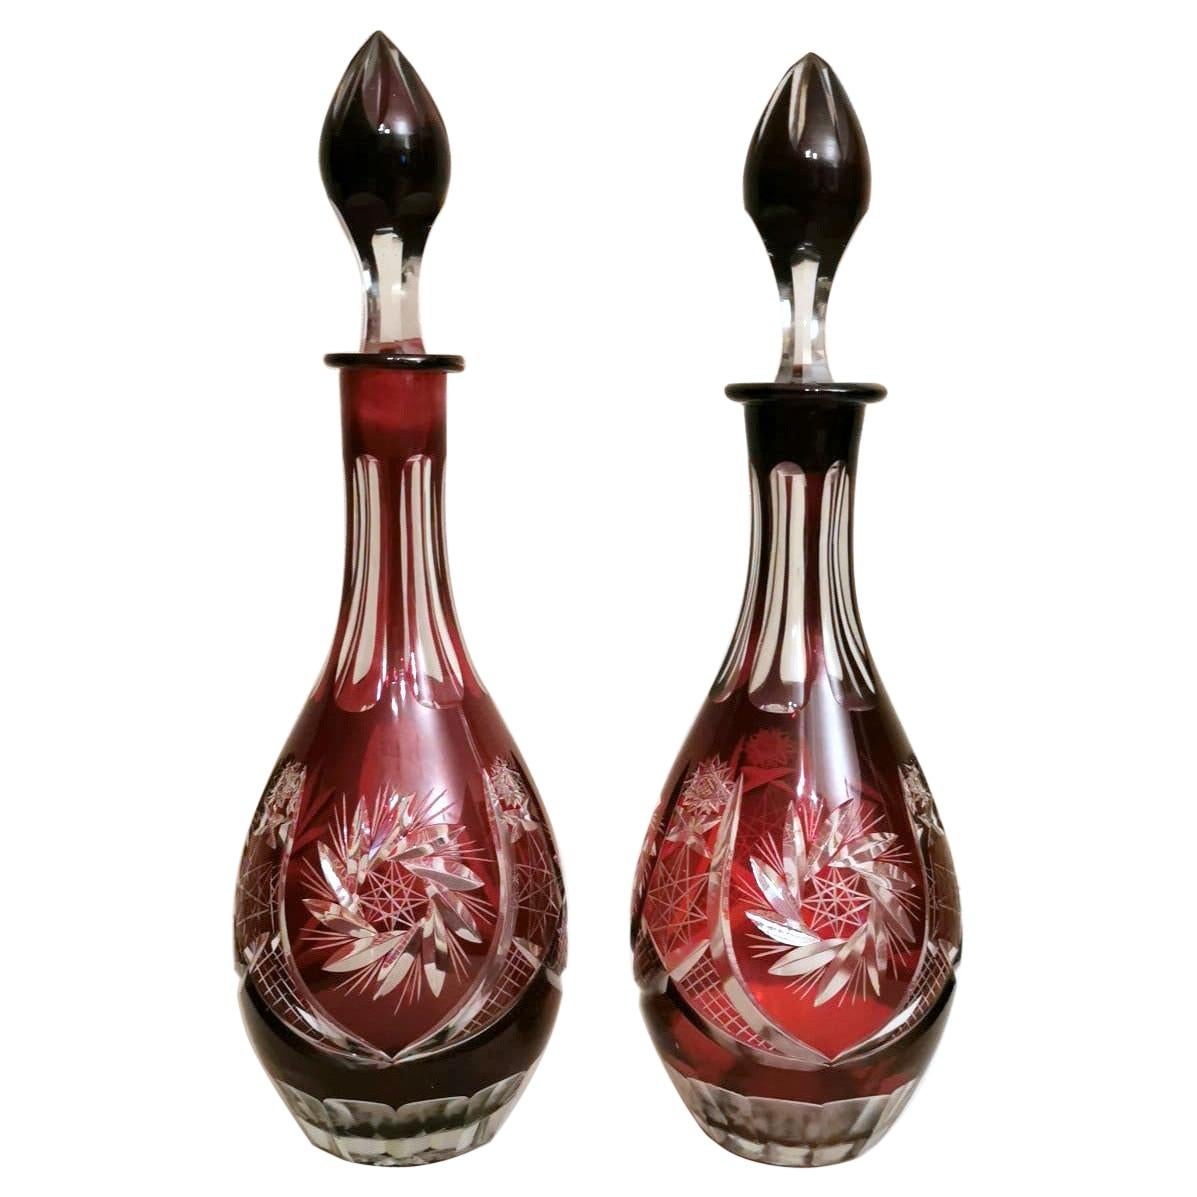 Biedermeir Style Bohemia Pair of Ruby Red Crystal Bottles Cut and Grinded